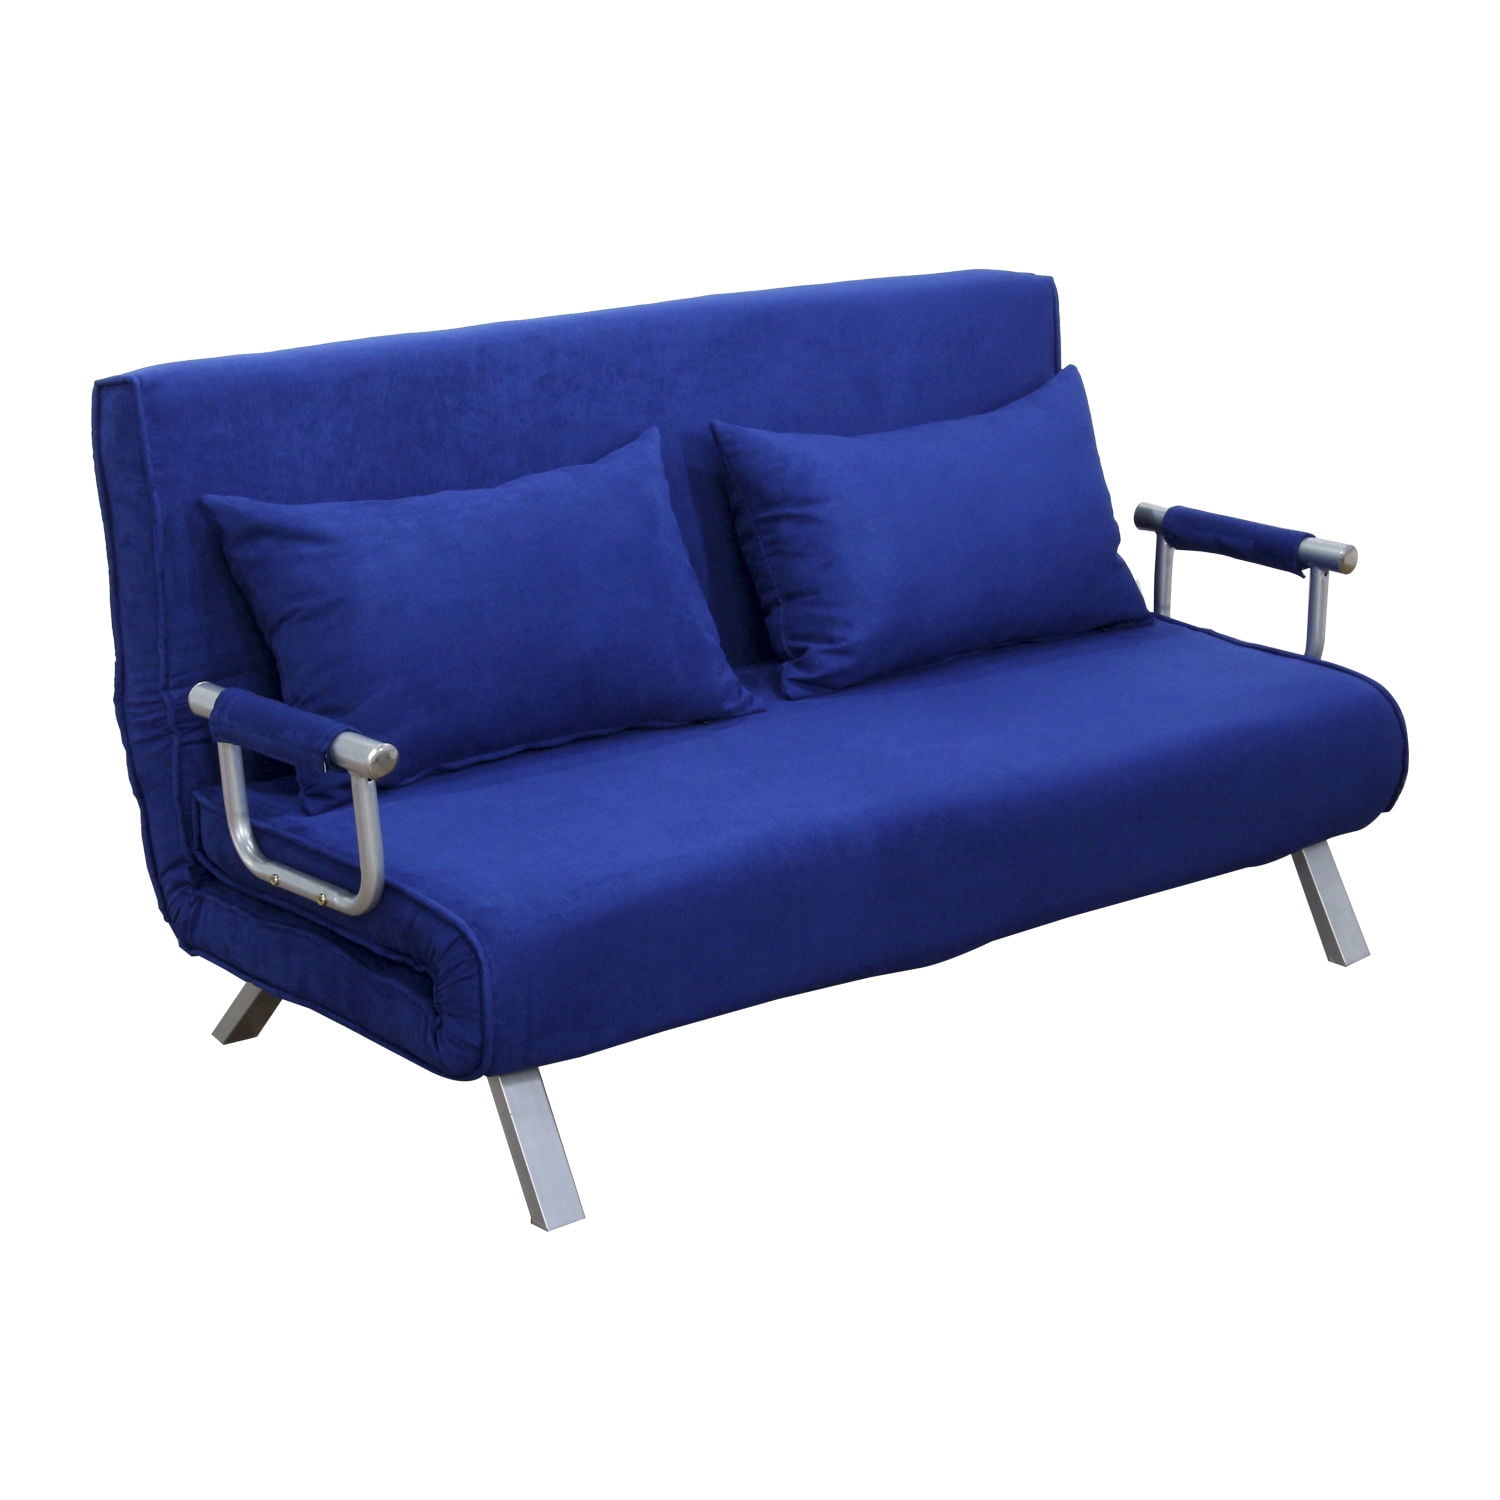 HomCom Queen Size Convertible Sleeper Sofa Bed Chair ...